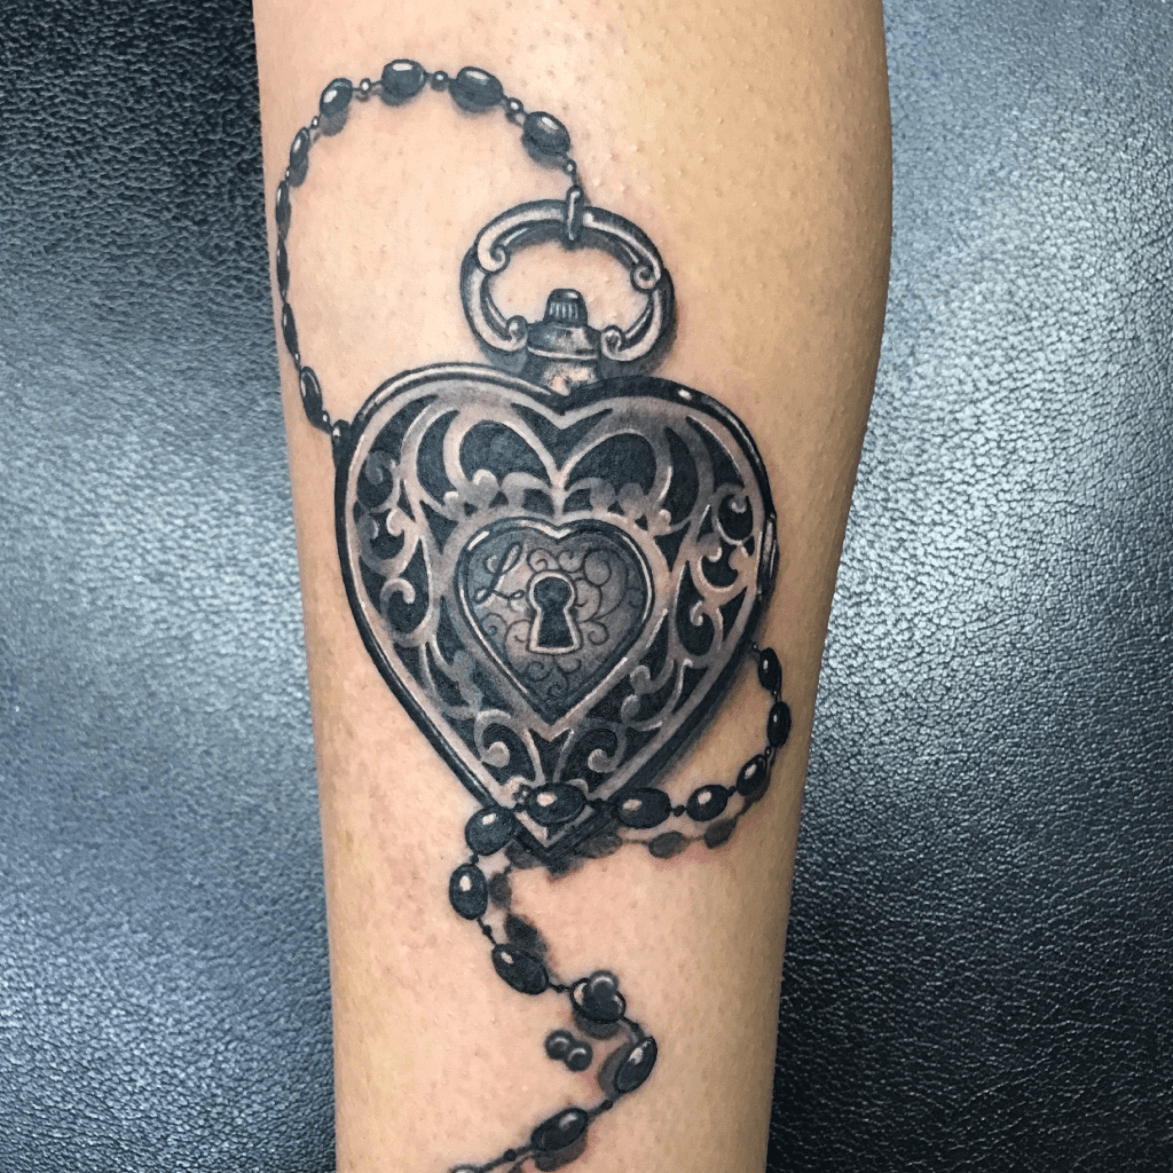 Tattoo uploaded by Tattoodo  Chained heart tattoo by Oozy Oozy  hearttattoos linework illustrative detailed heart anatomicalheart  love chain arrow blade knife  Tattoodo